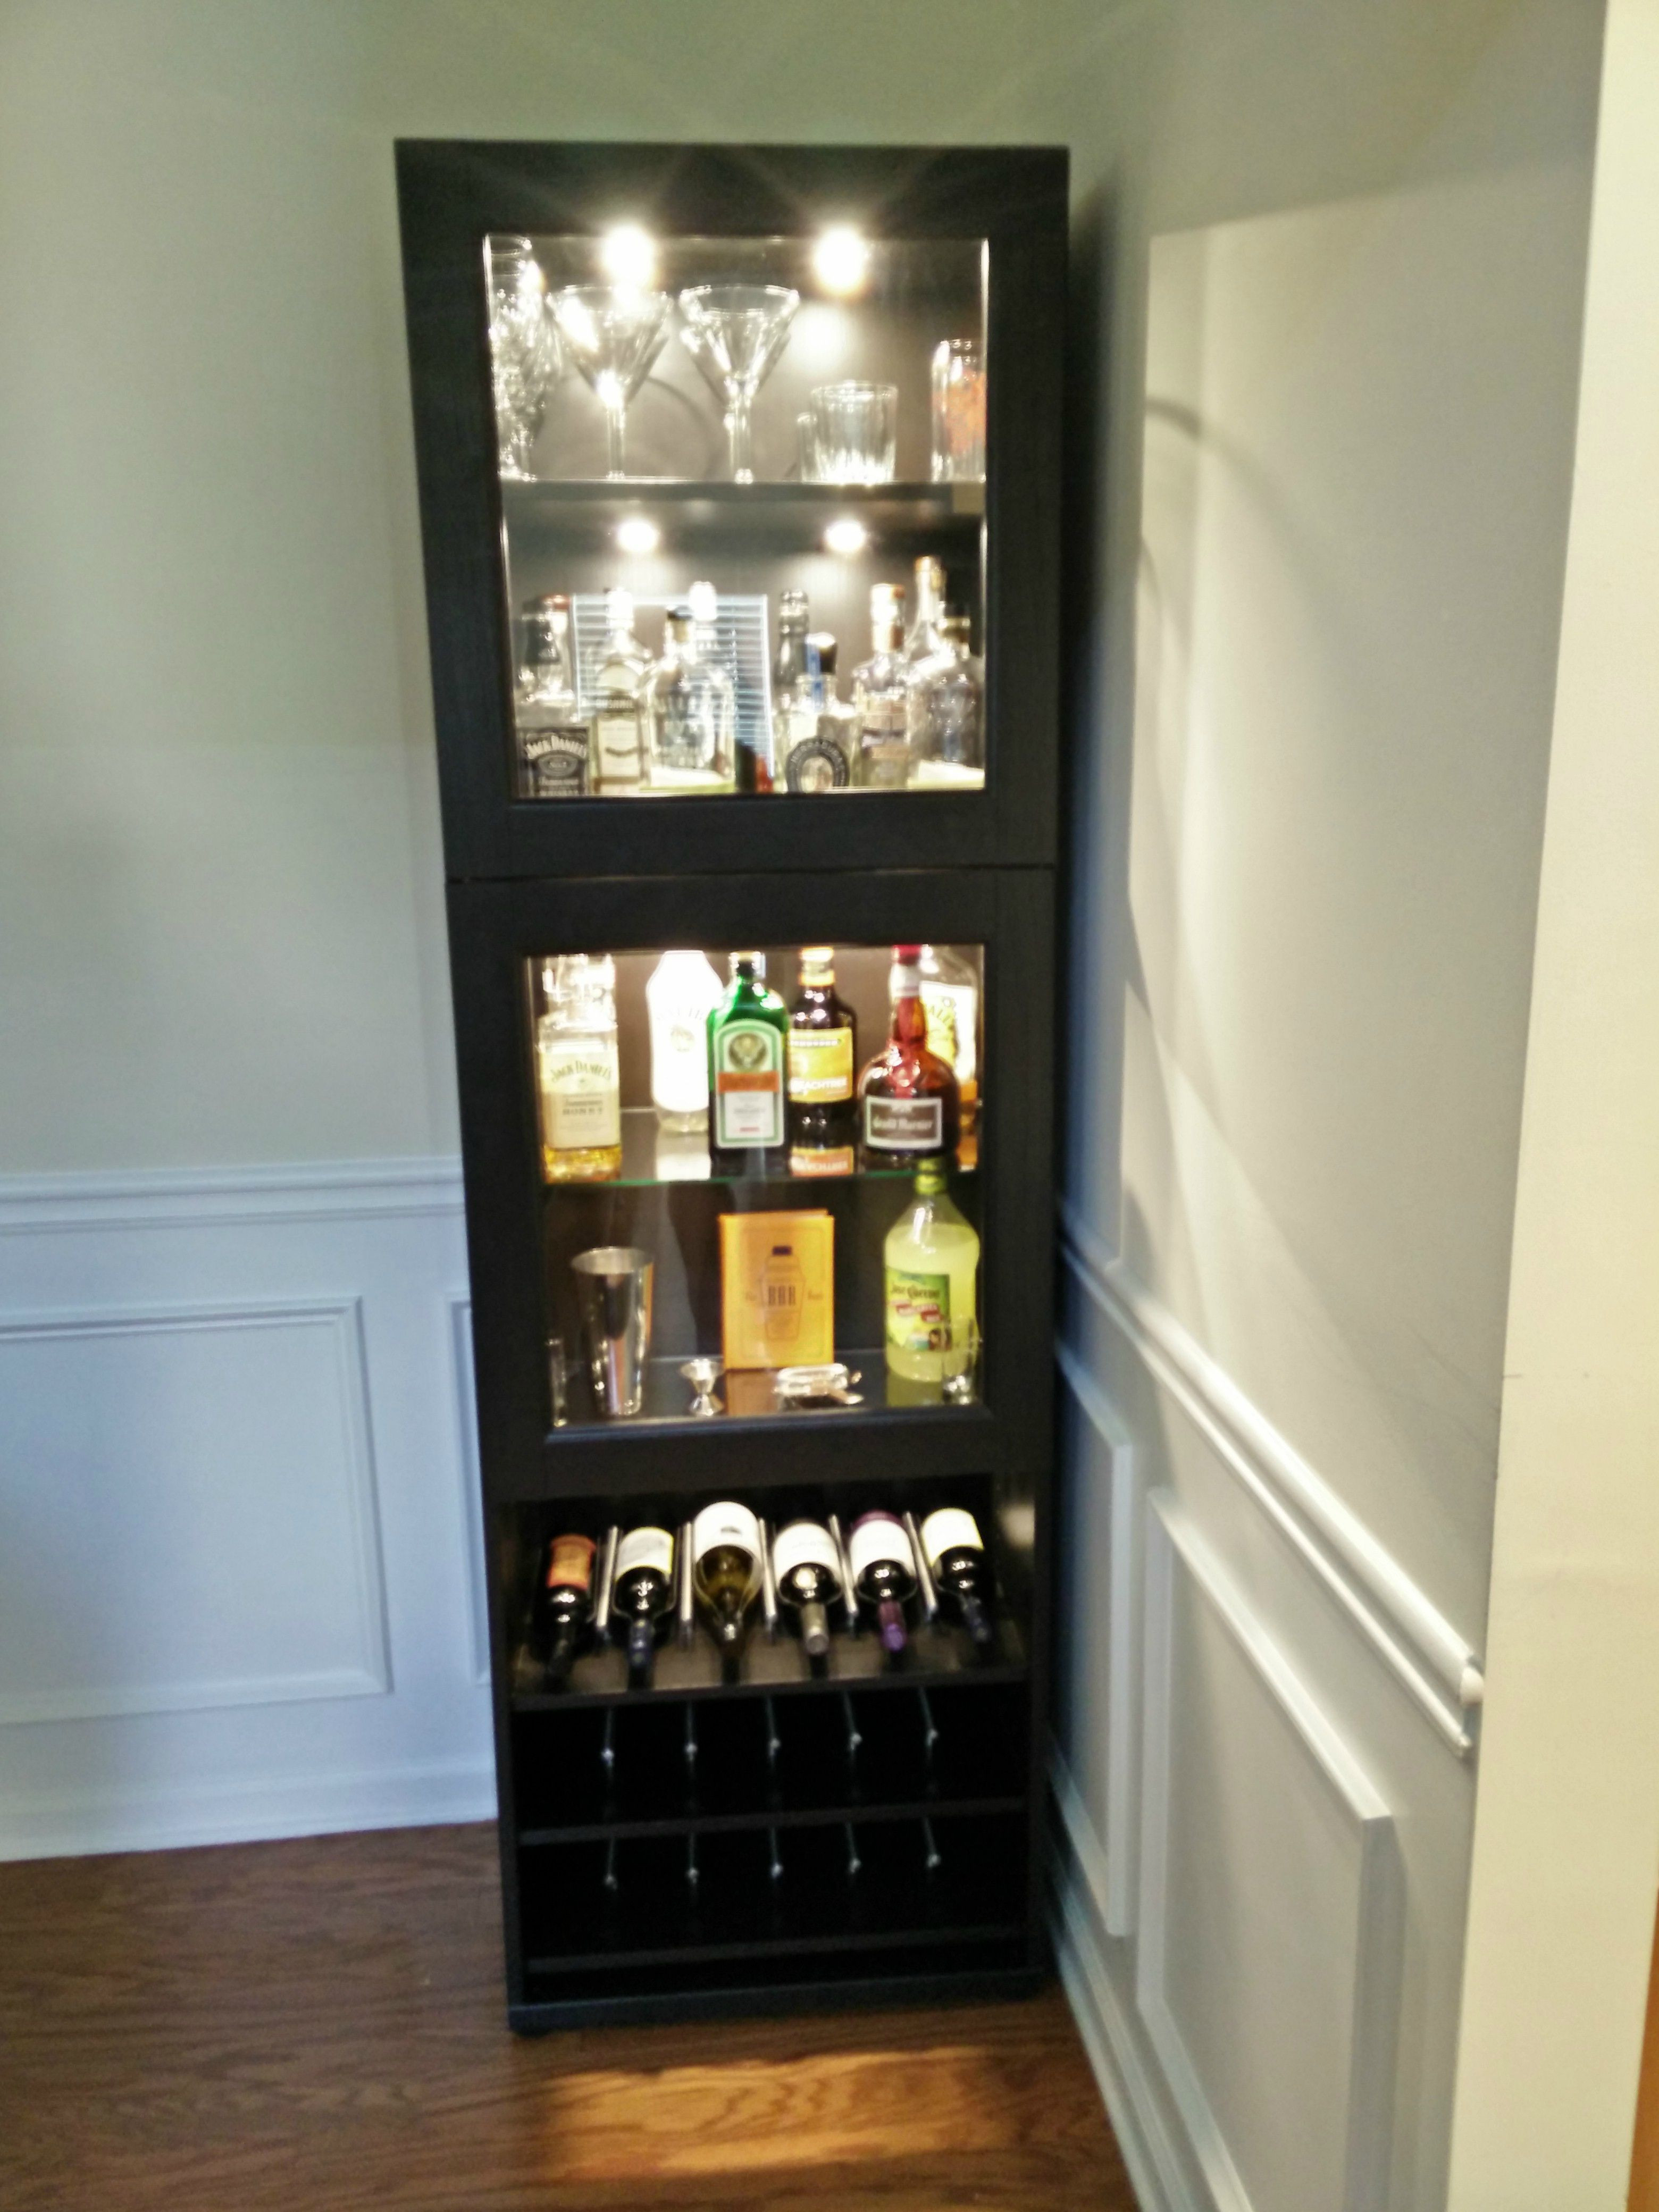 Best ideas about Liquor Cabinet Ikea
. Save or Pin IKEA Liquor Cabinet Build in 2019 liquor cabinet Now.